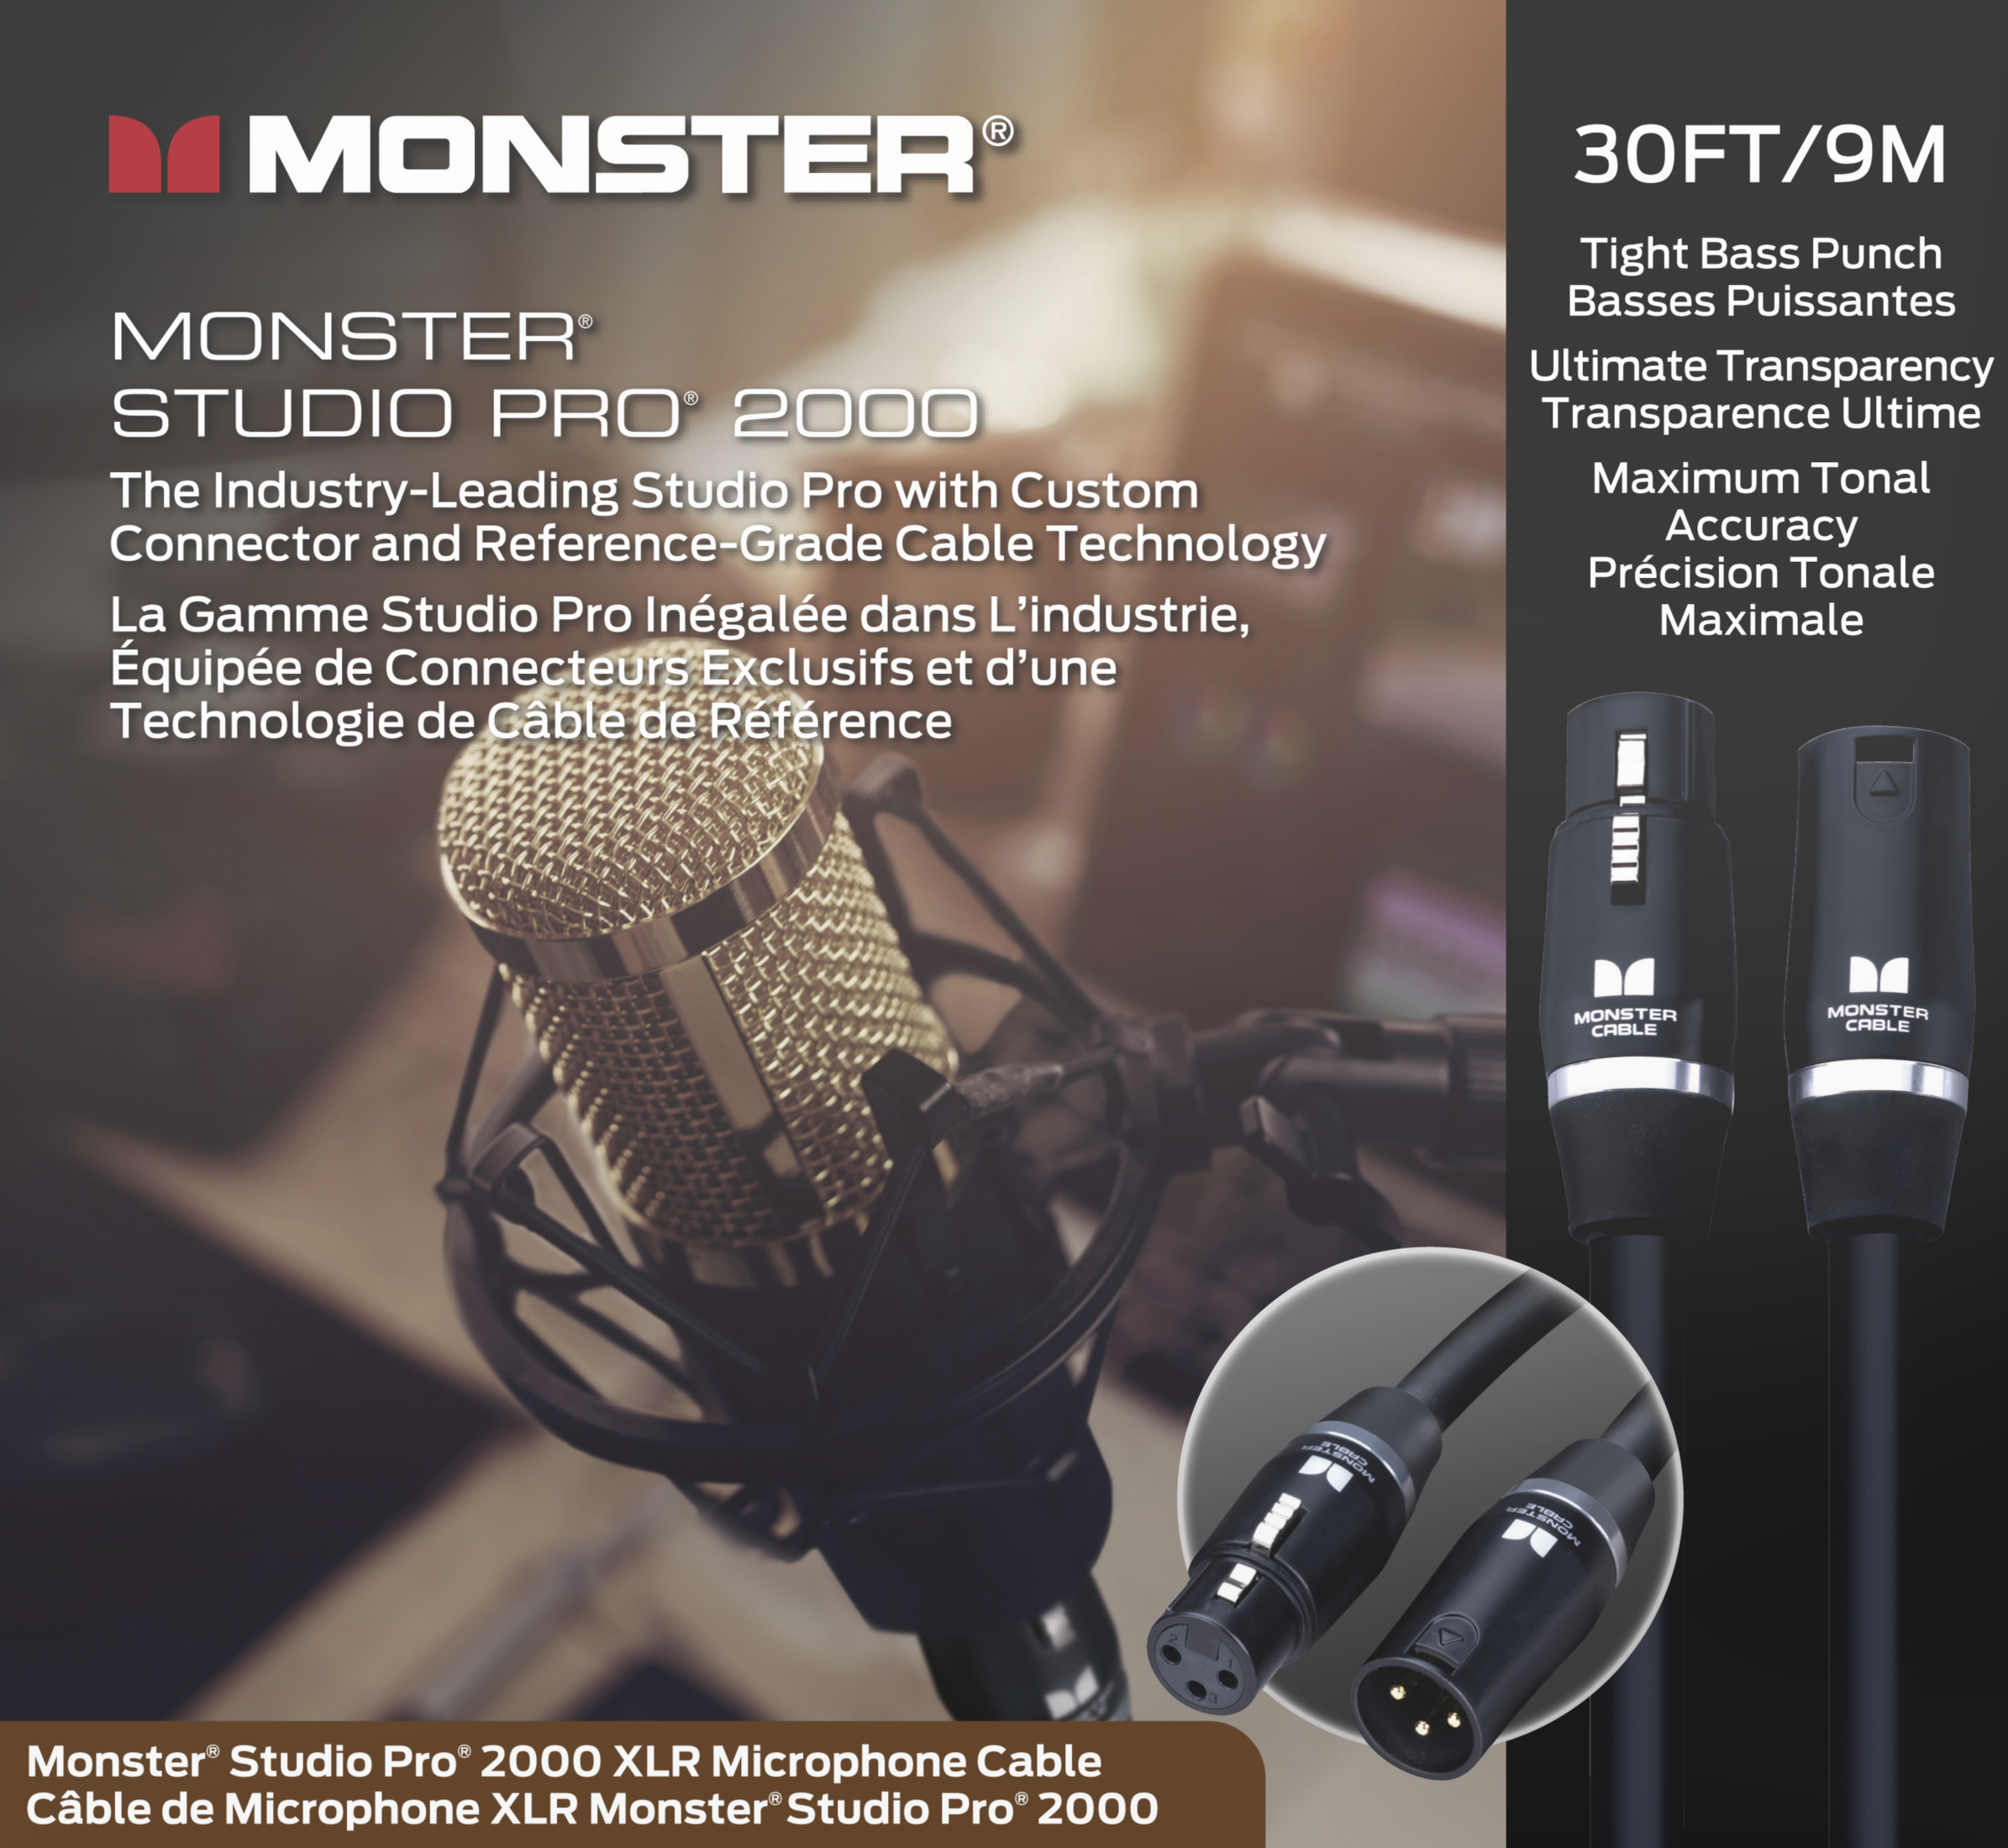 Monster® Prolink Studio Pro 2000 Microphone Cable - HIENDGUITAR 30ft(9m) 30ft(9m) Monstercable Cable